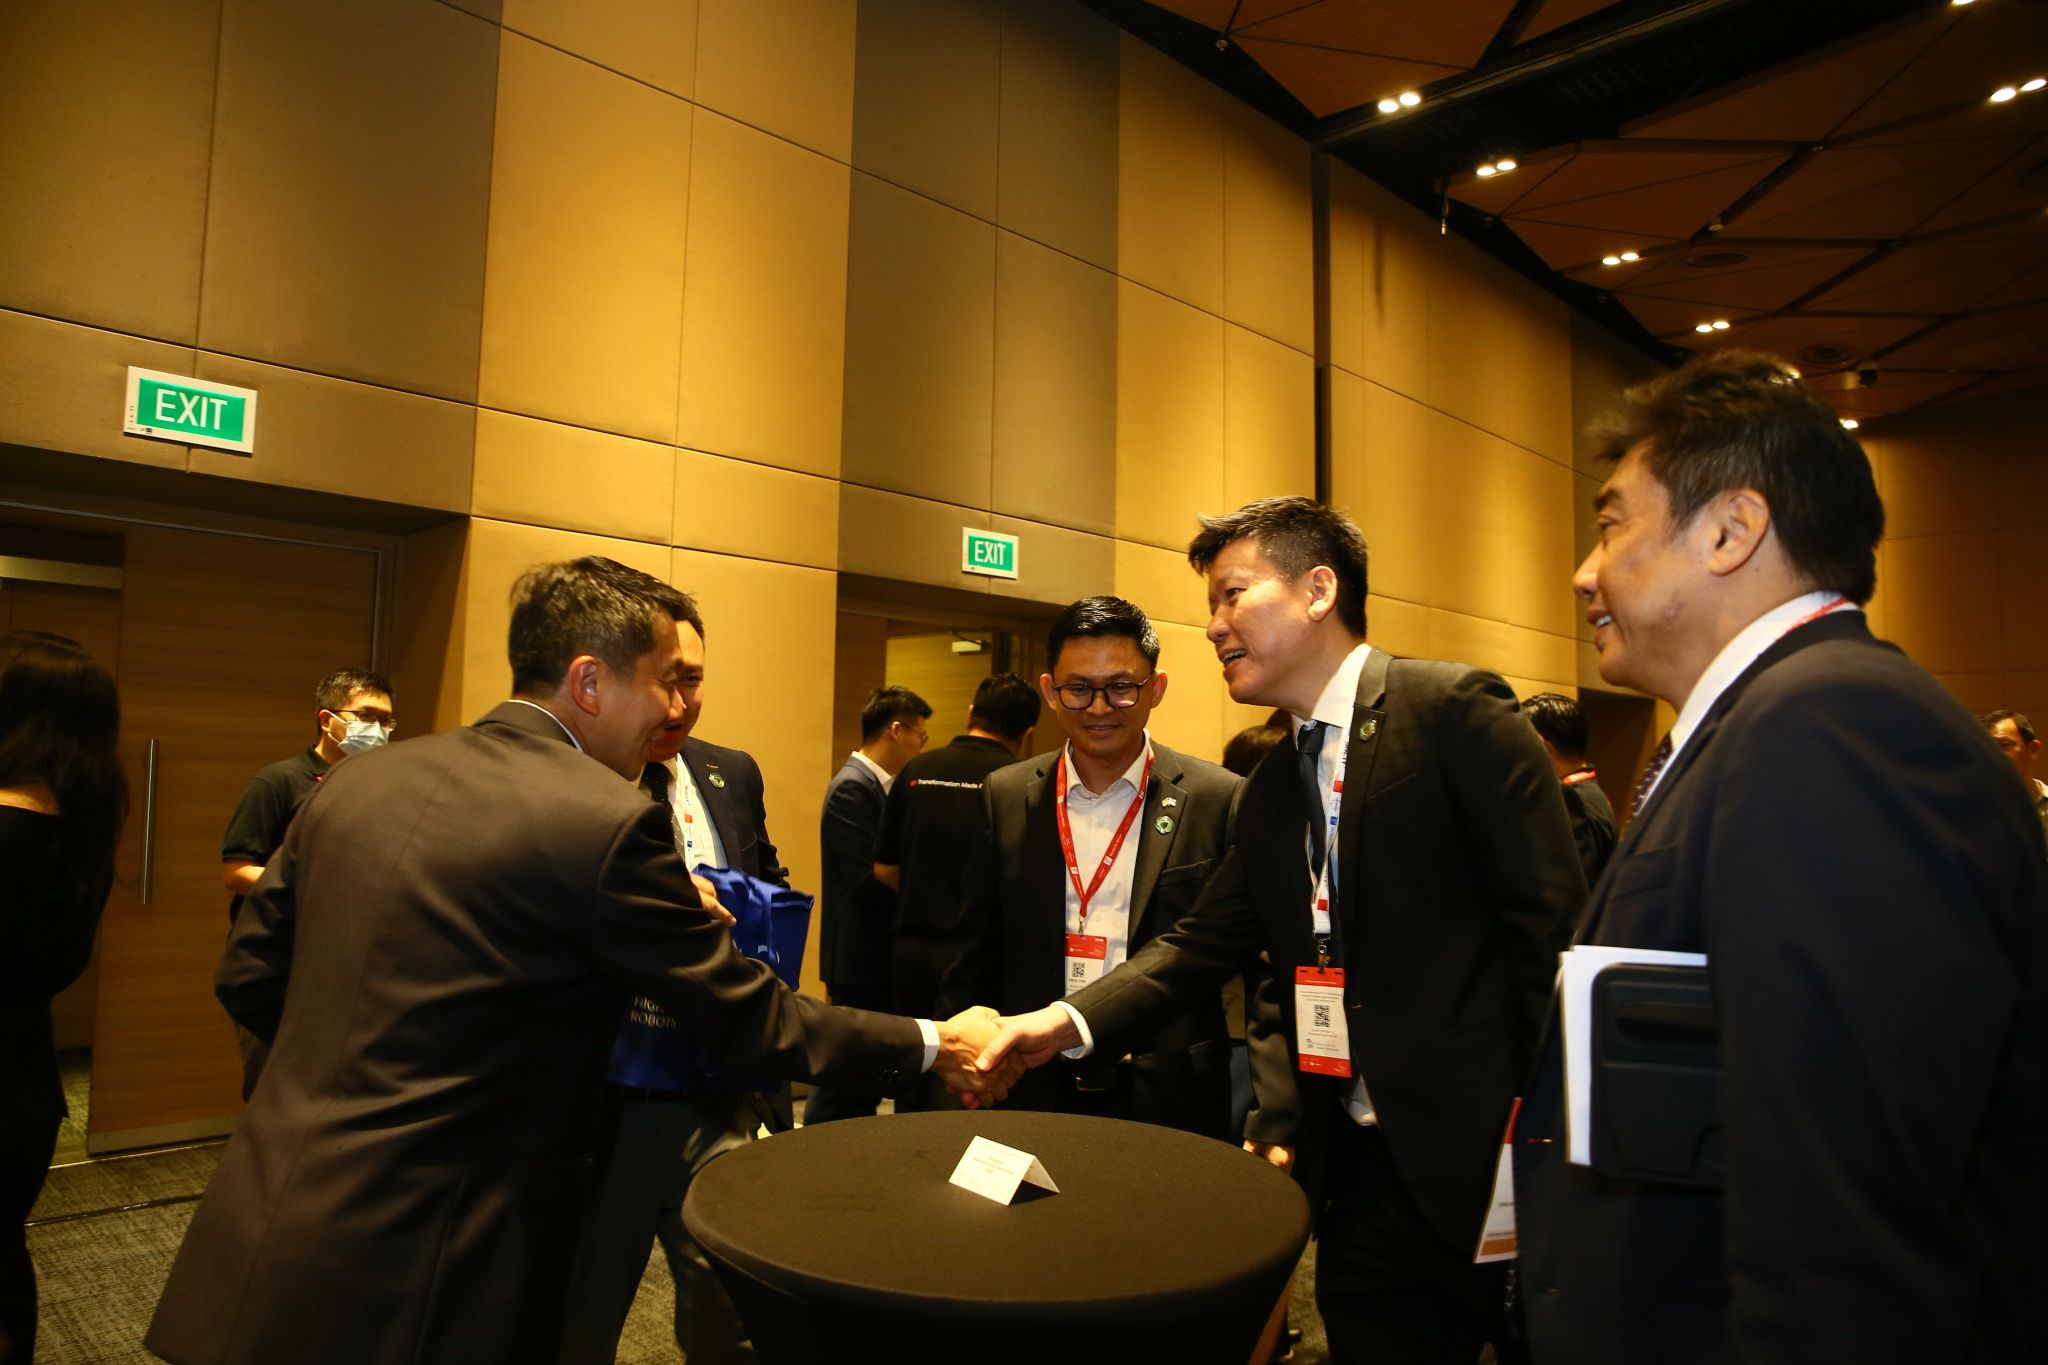 SMF President, Mr Lennon Tan, Mr Ryan Chioh, and Mr David Chia